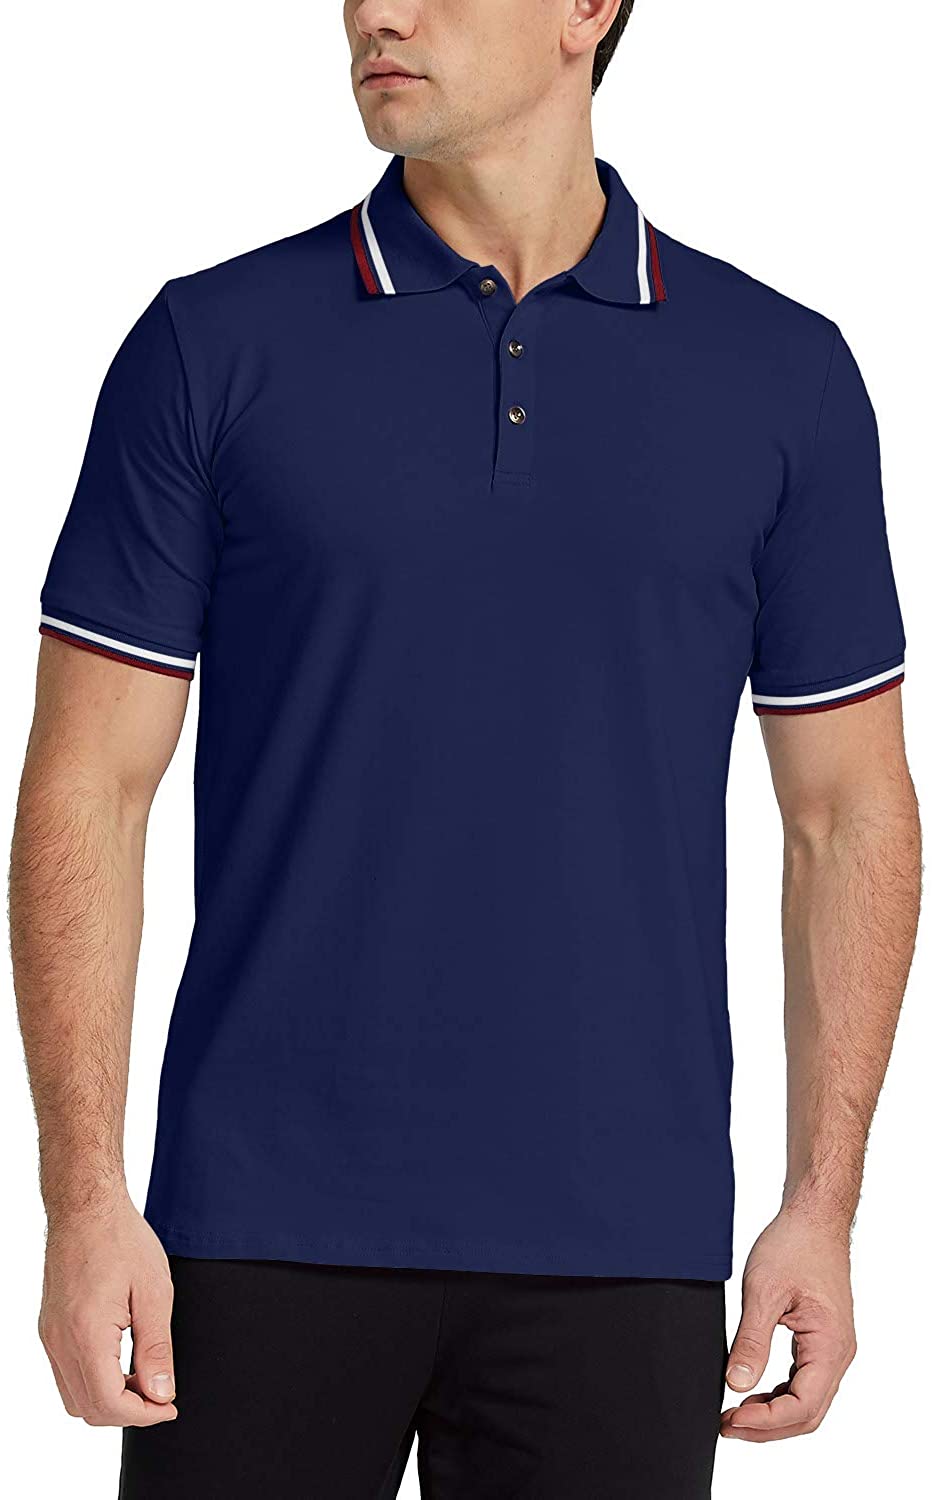 MLANM Mens Polo Shirt Short Sleeve Casual Slim-fit Cotton Tee Top 